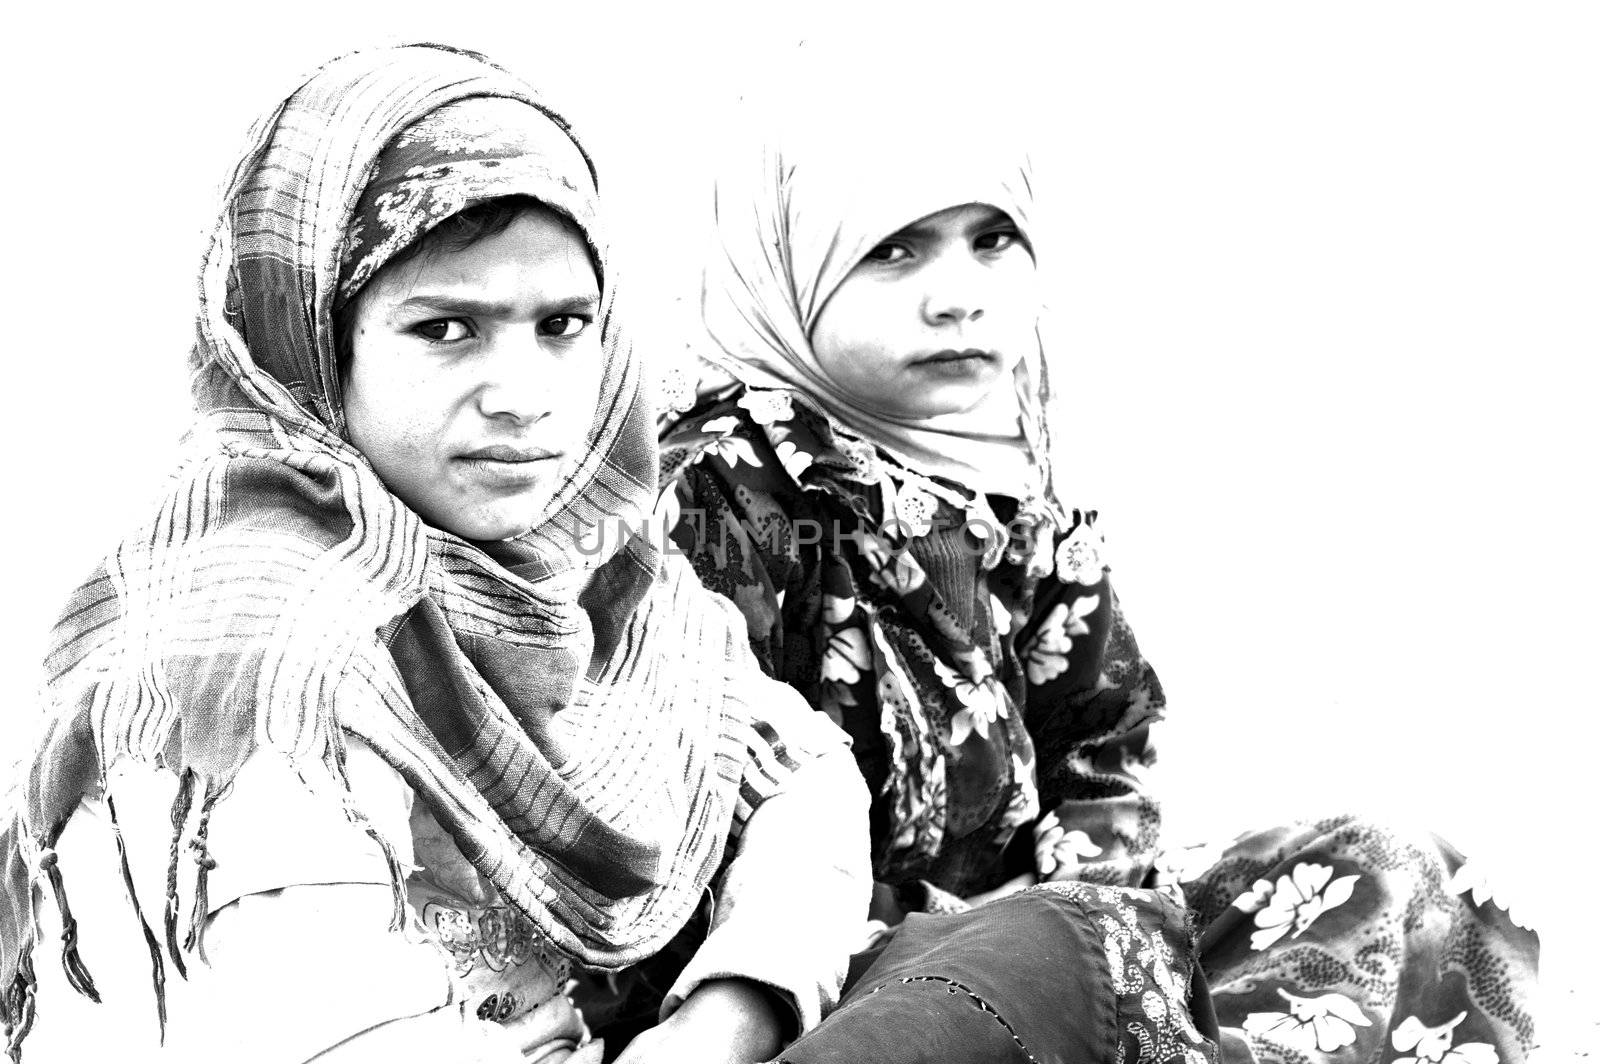 HURGHADA - JAN 30: Bedouin girls look at photographer sat in Sahara desert.Jan 30,2013 in Hurghada,Egypt.